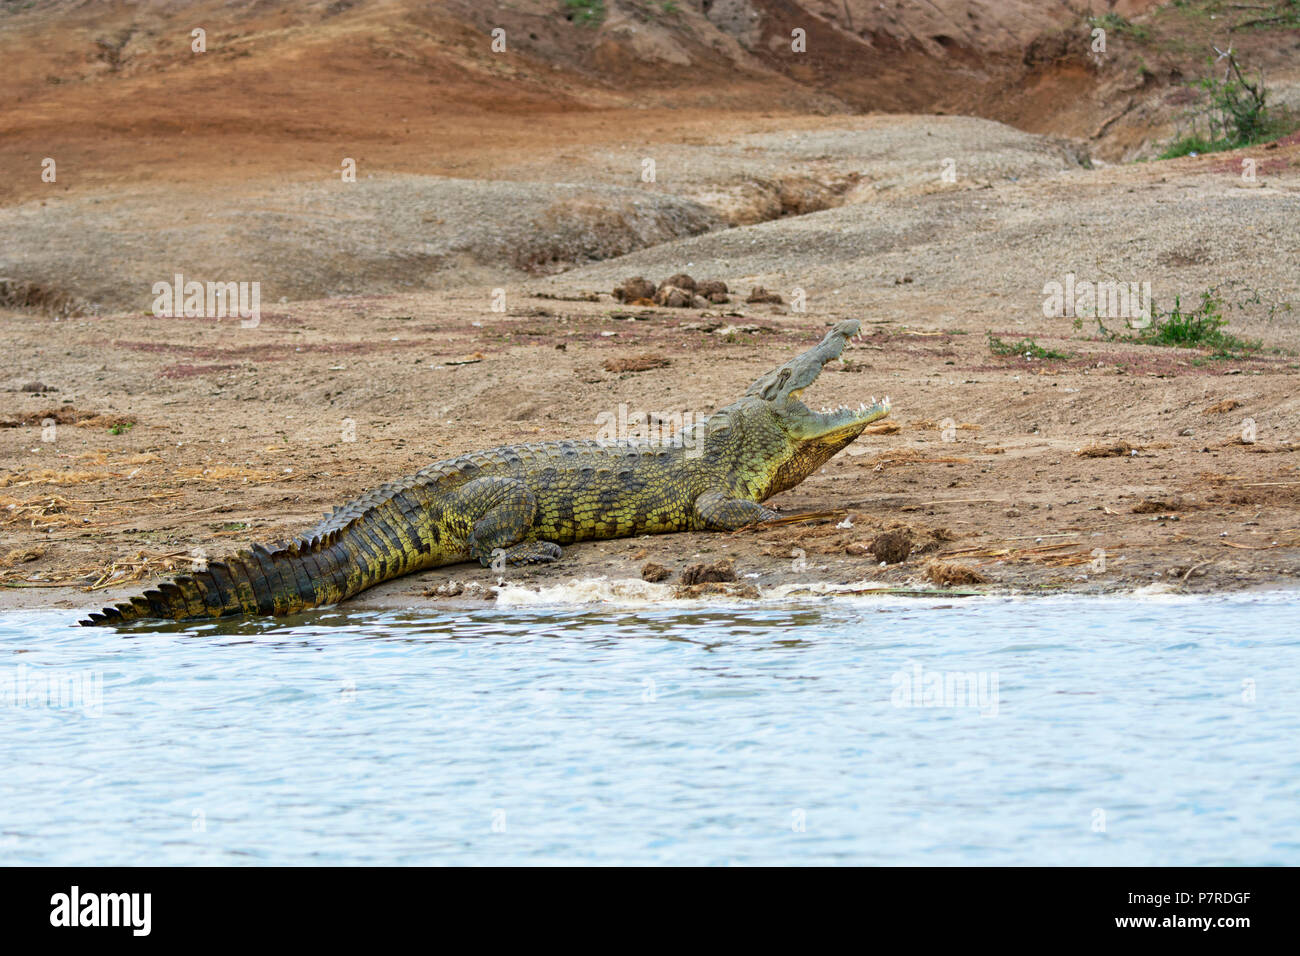 Crocodile on the banks of the Kazinga Channel, Queen Elizabeth National Park, Uganda Stock Photo